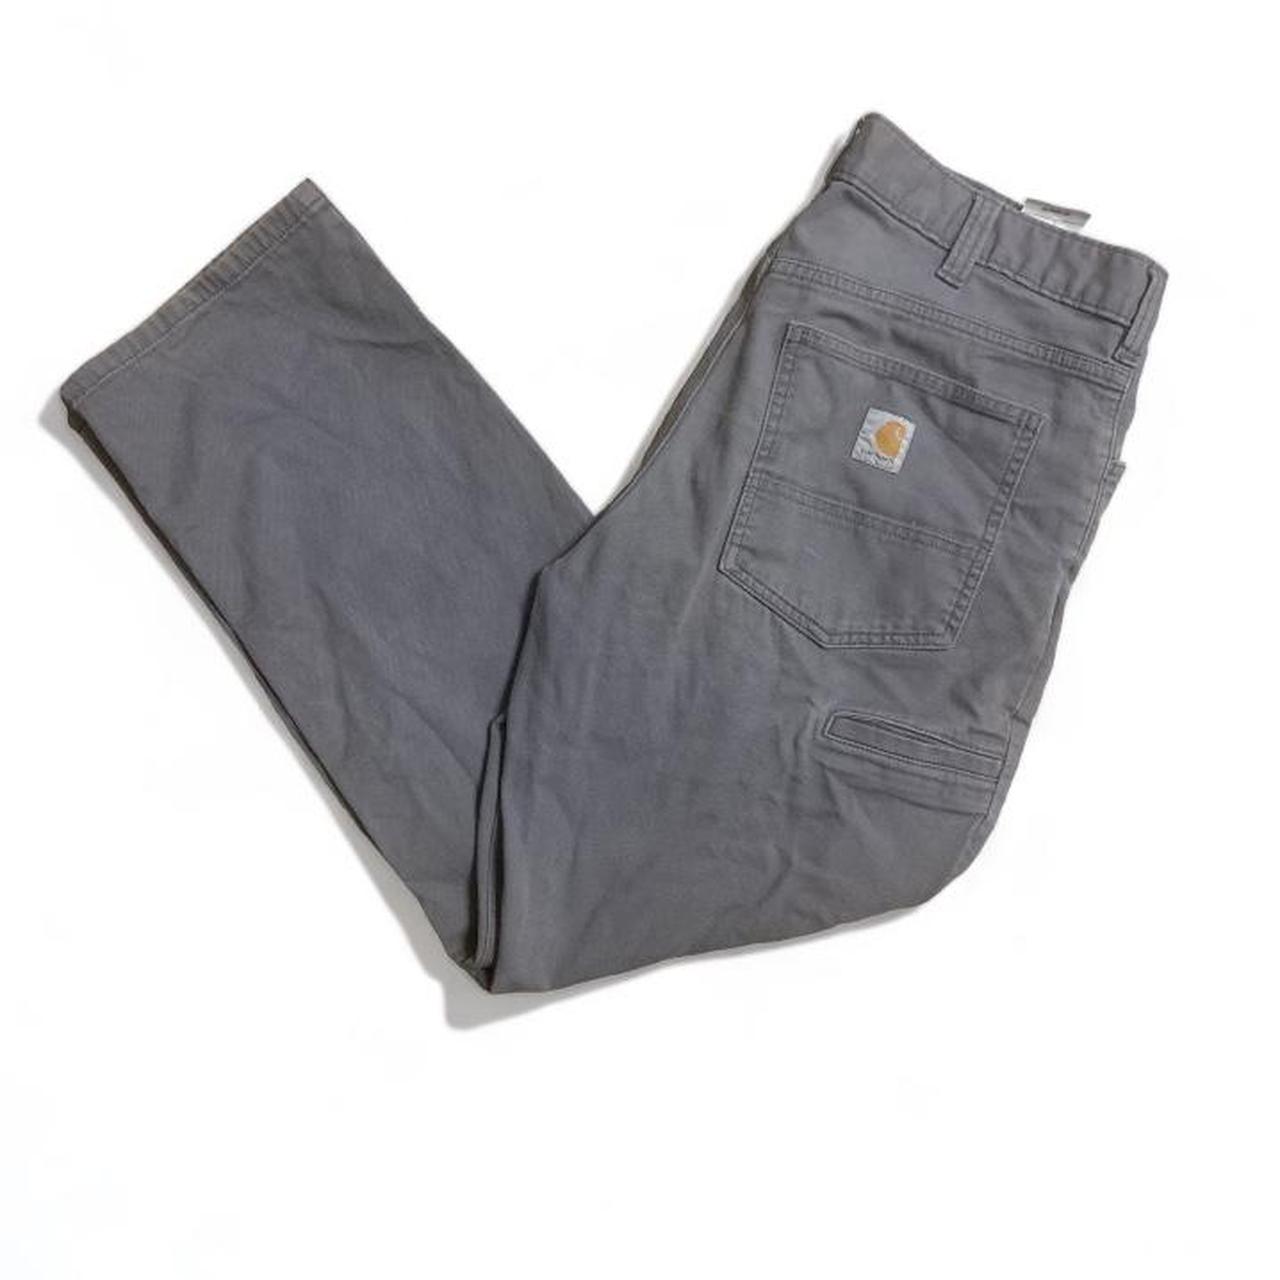 Grey Carhartt Utility Cargo Pants/Jeans Waist... - Depop